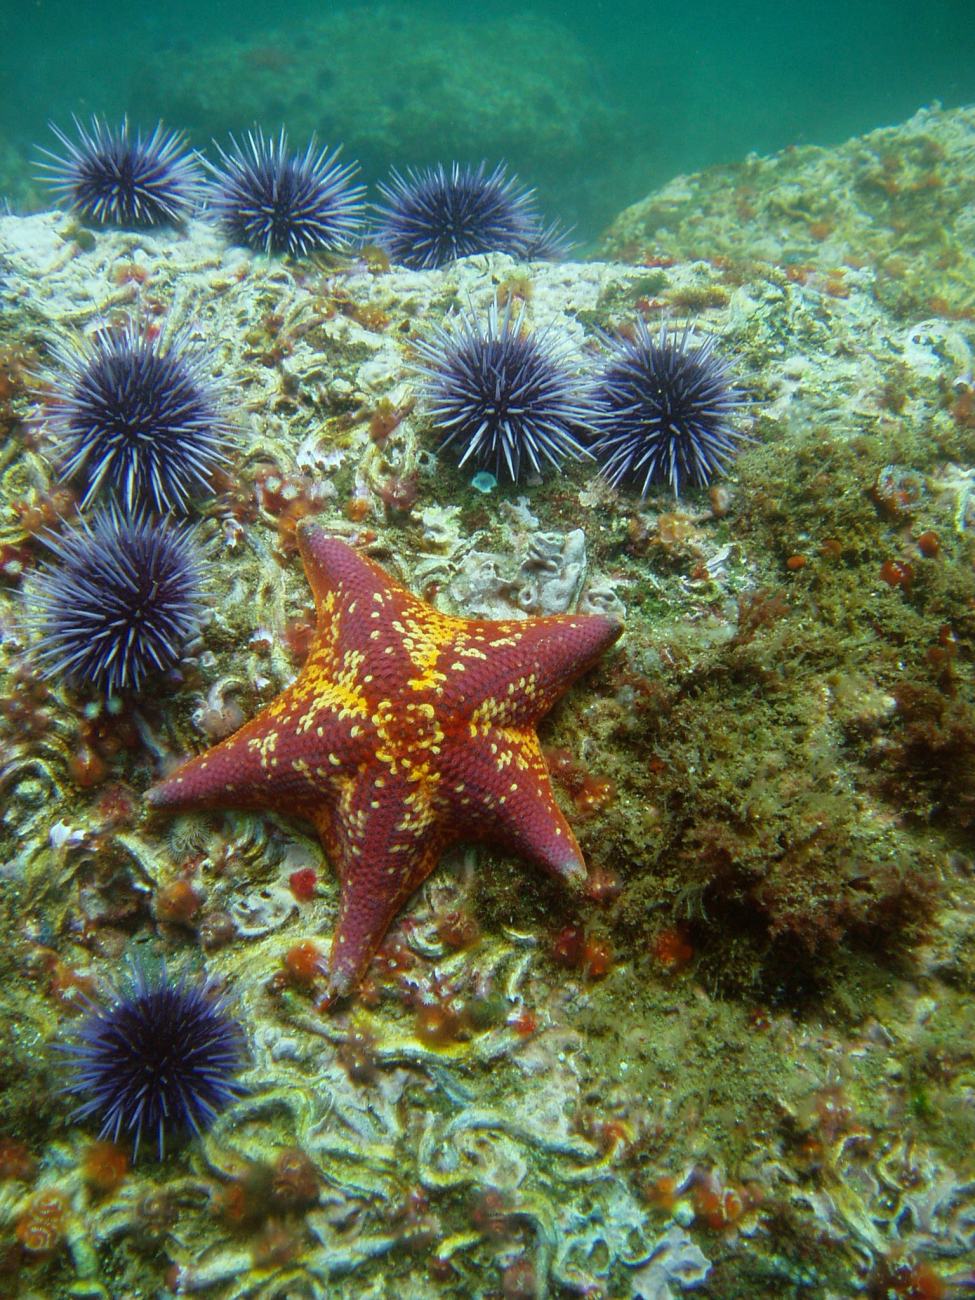 Bat star (Asterina miniata) and purple urchins (Strongylocentrotus purpuratus)